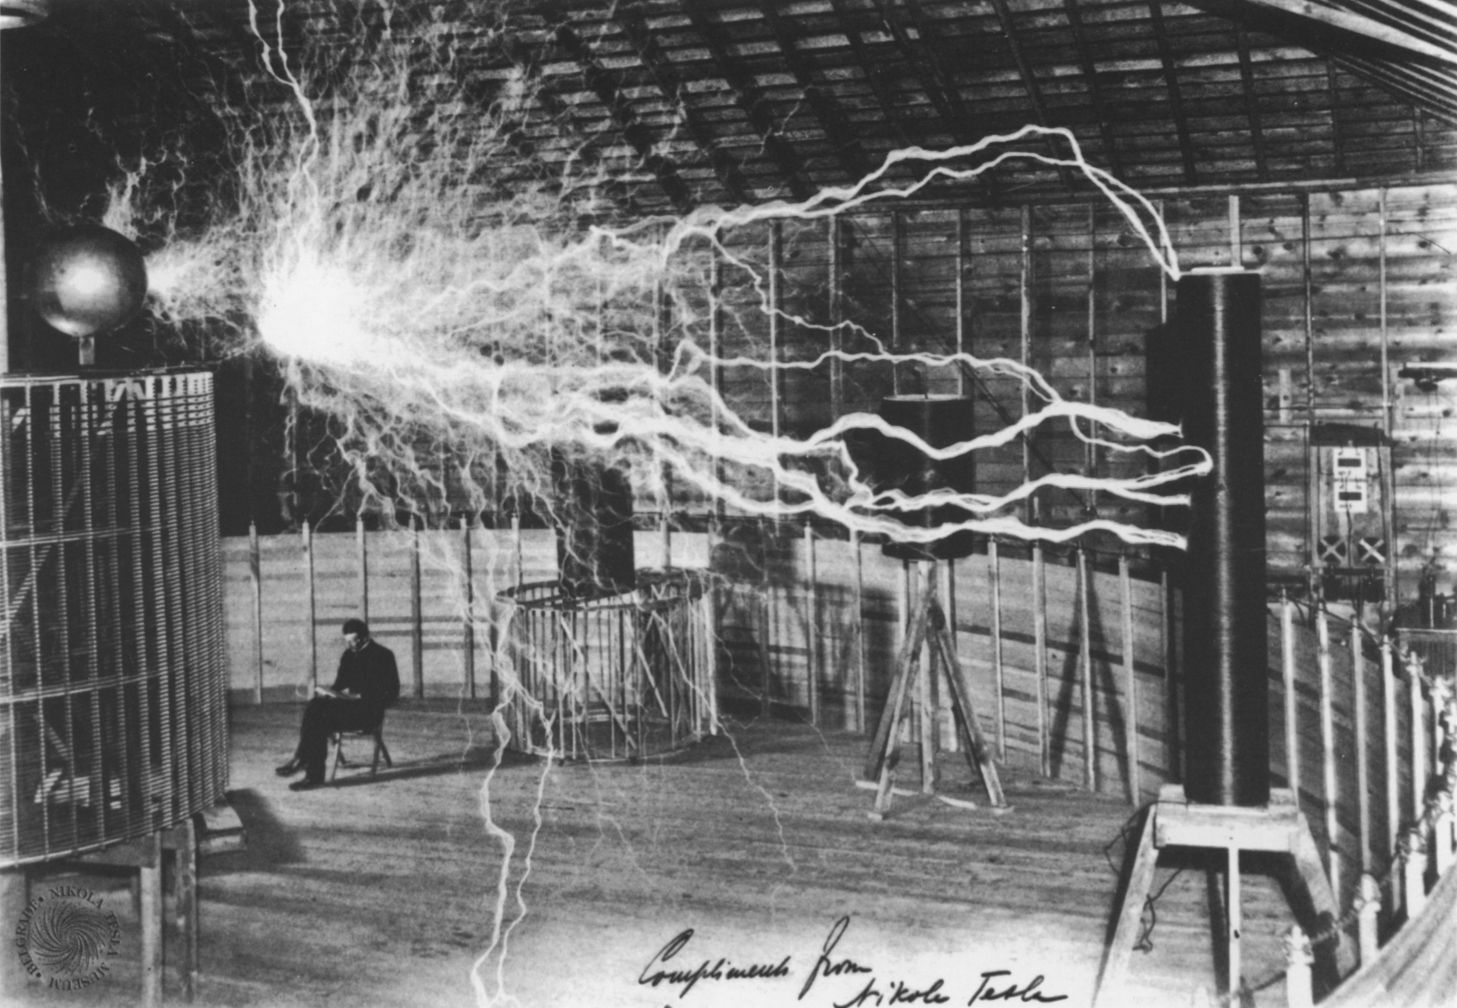 Cut the cord already, I want wireless power!” said Tesla